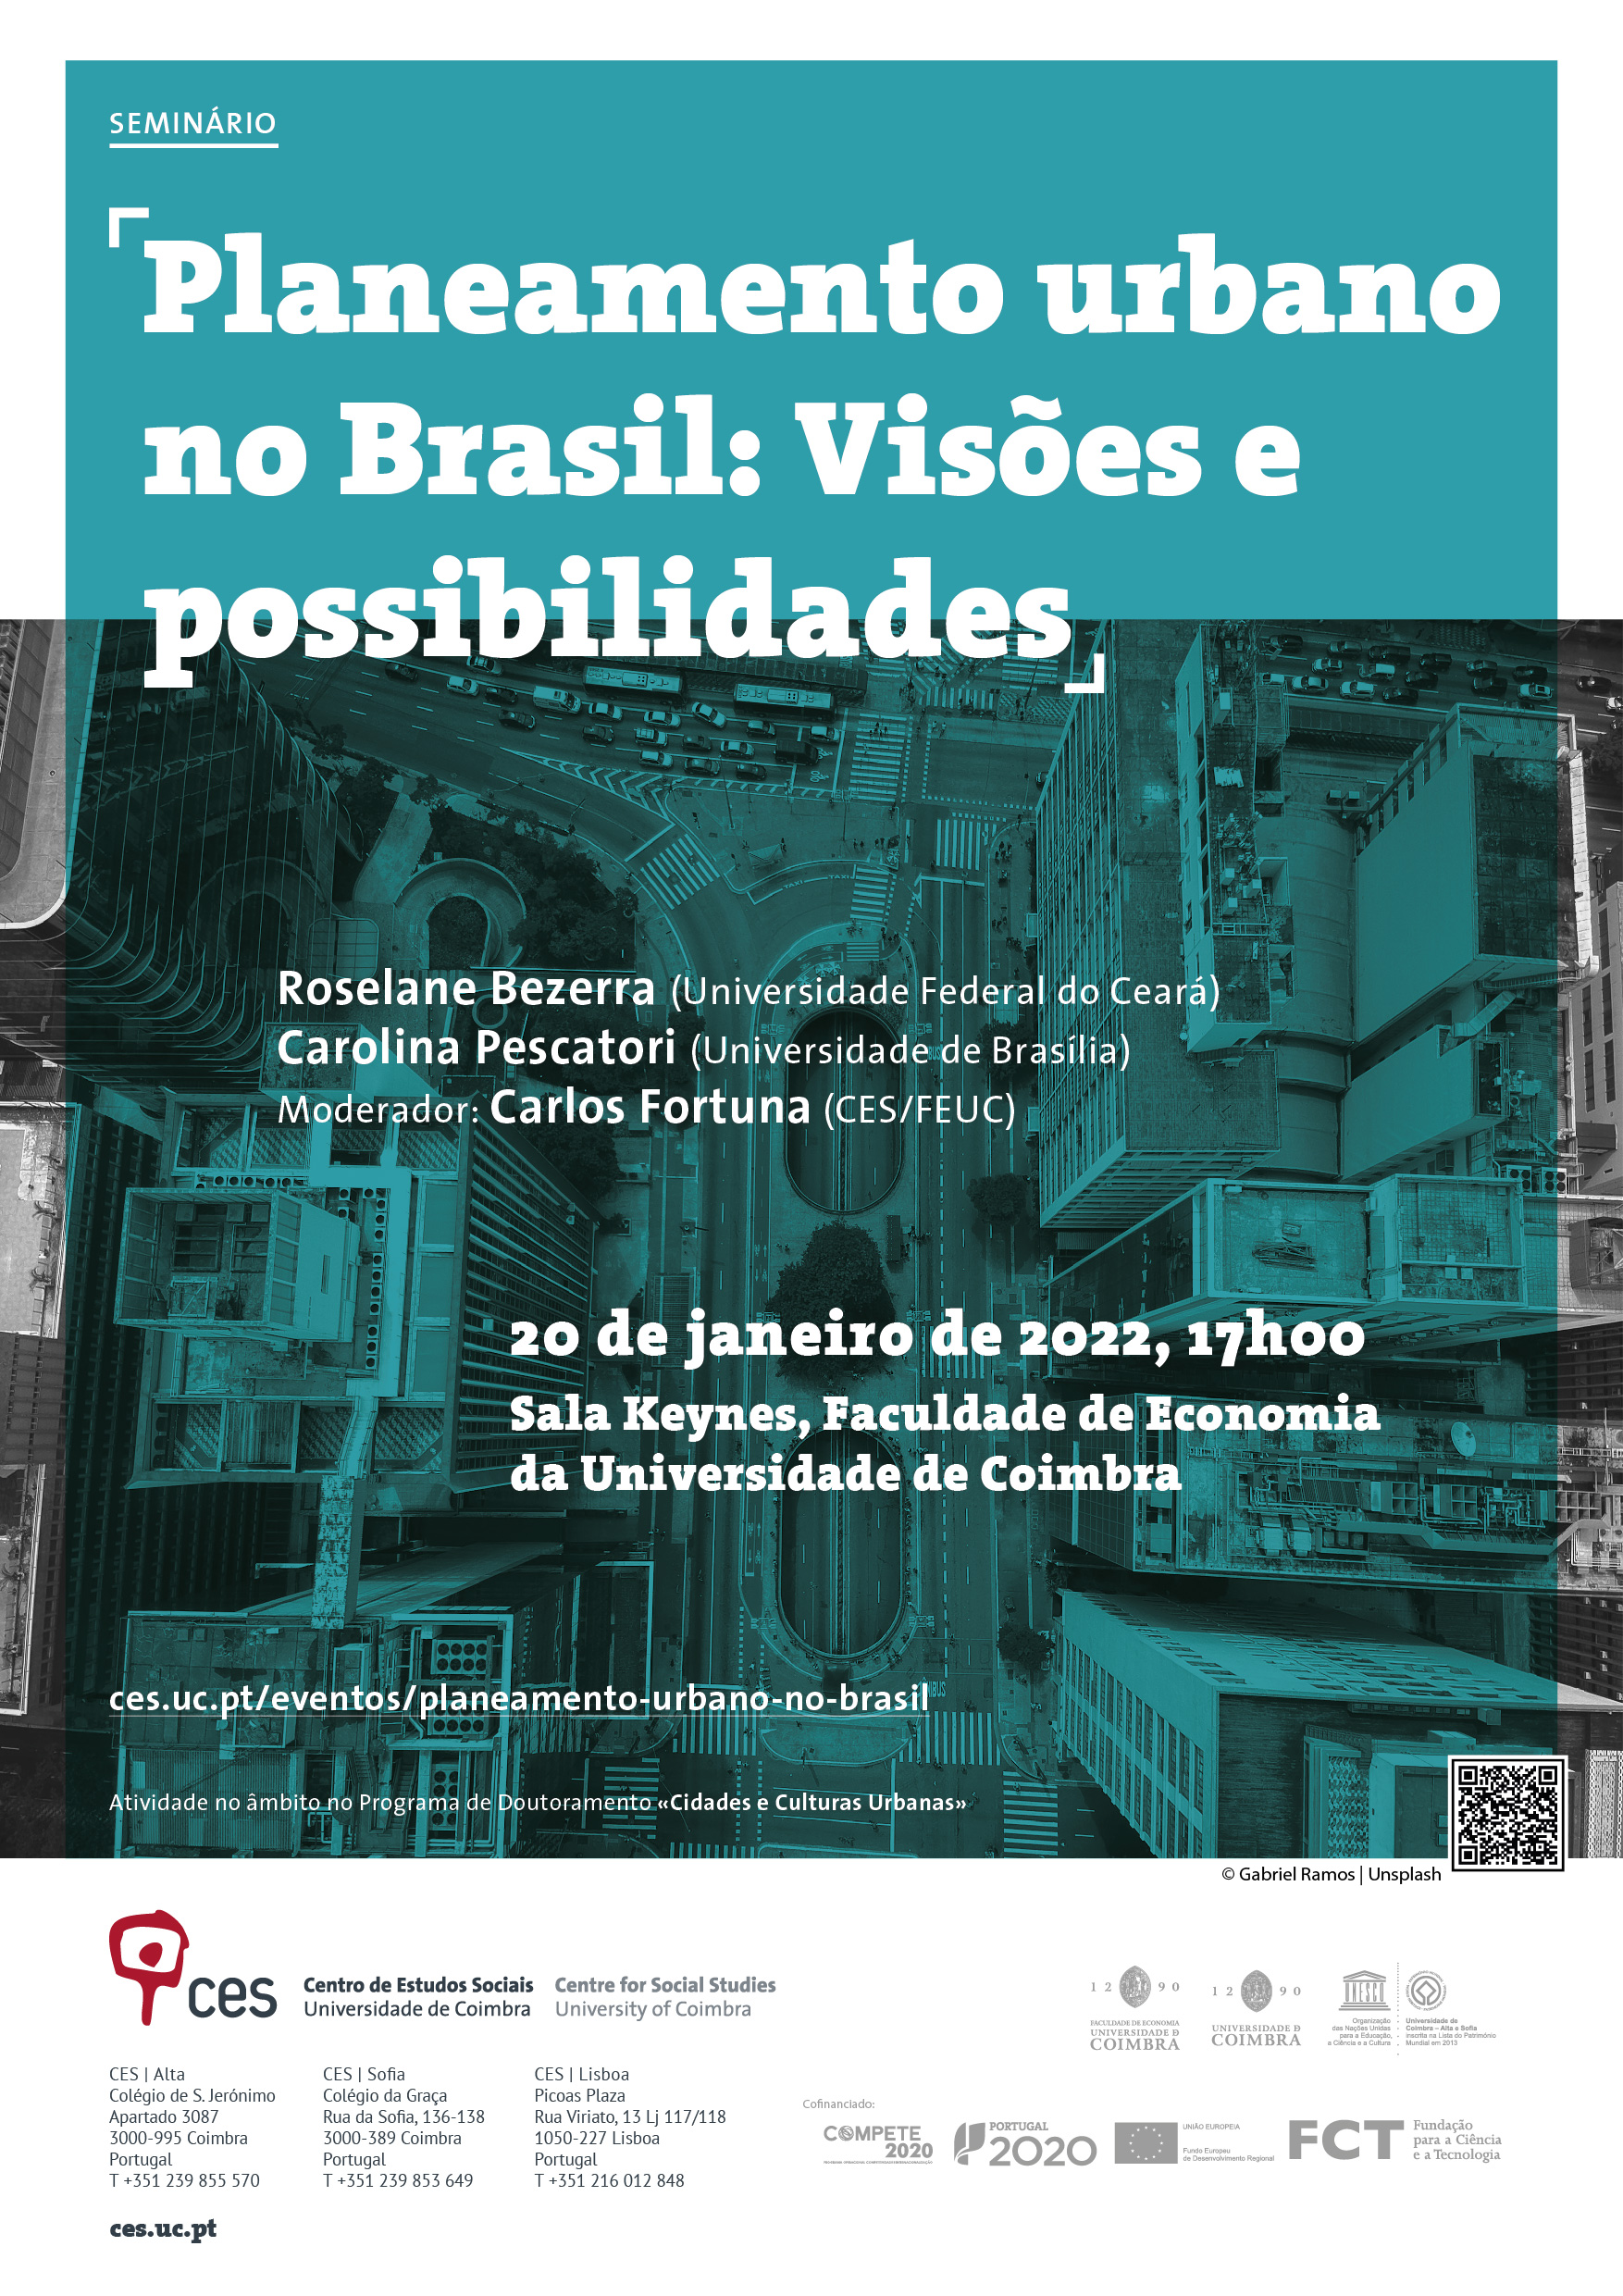 Planeamento urbano no Brasil: Visões e possibilidades<span id="edit_36865"><script>$(function() { $('#edit_36865').load( "/myces/user/editobj.php?tipo=evento&id=36865" ); });</script></span>